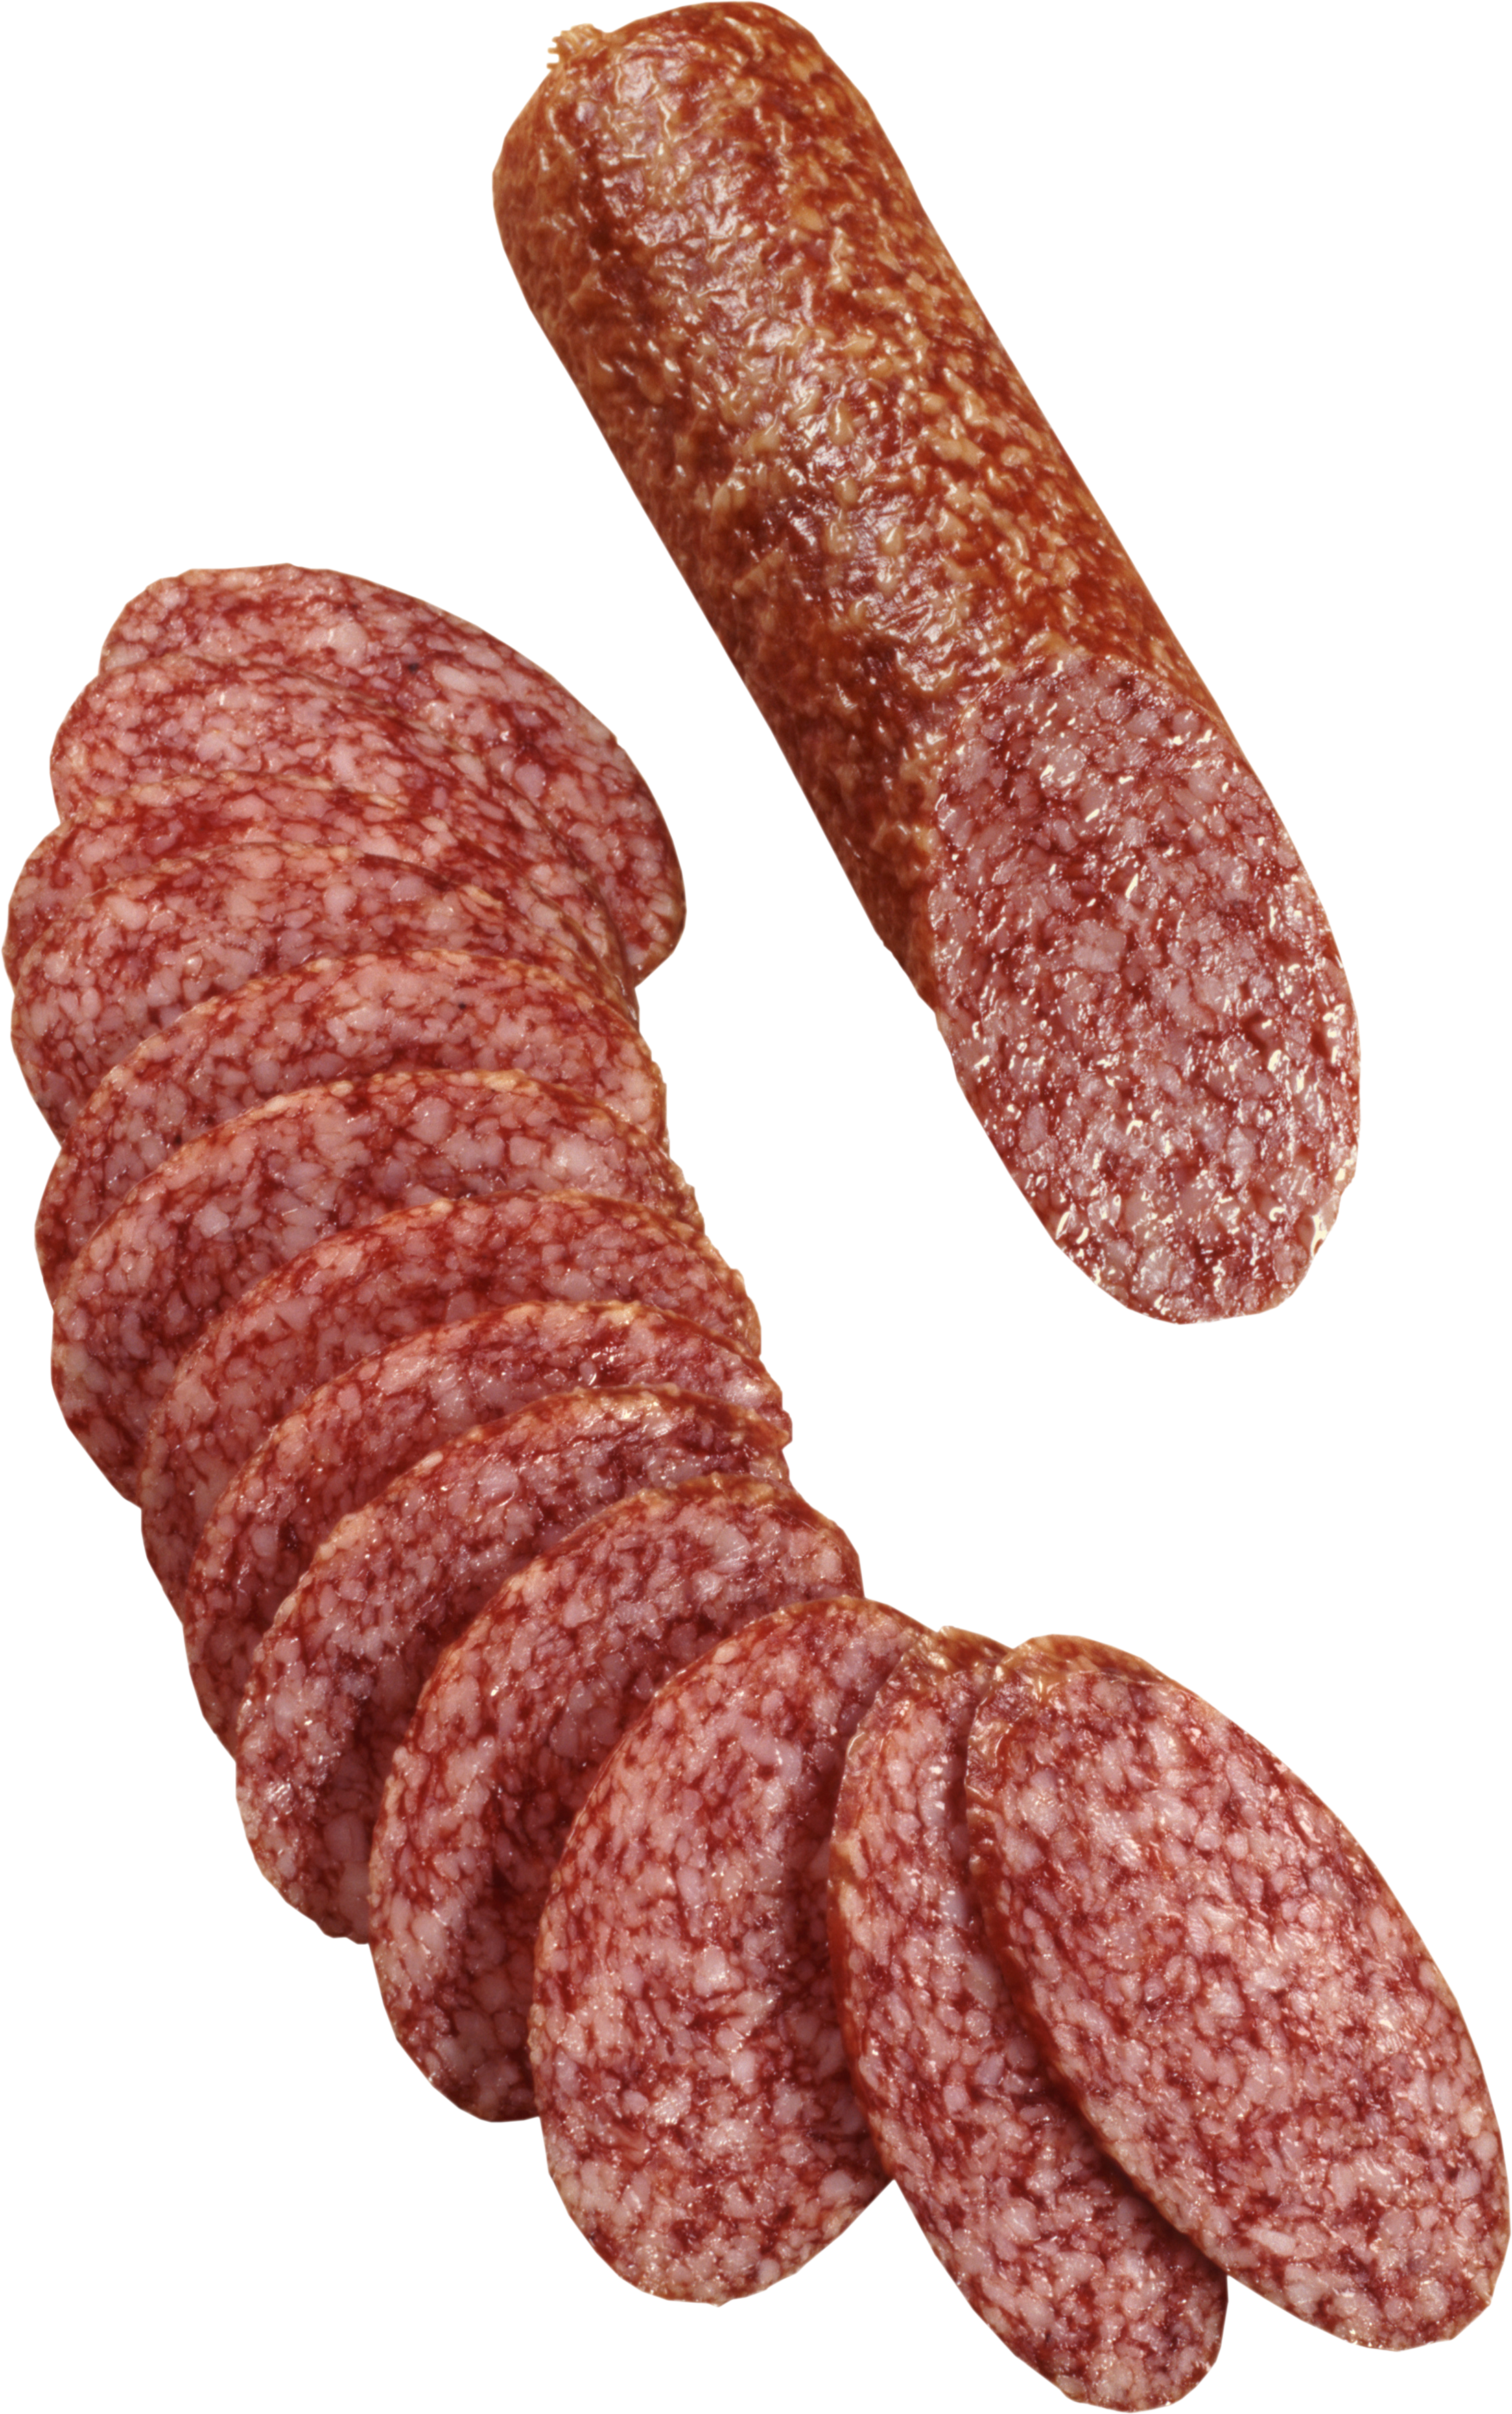 Sausage PNG images Download